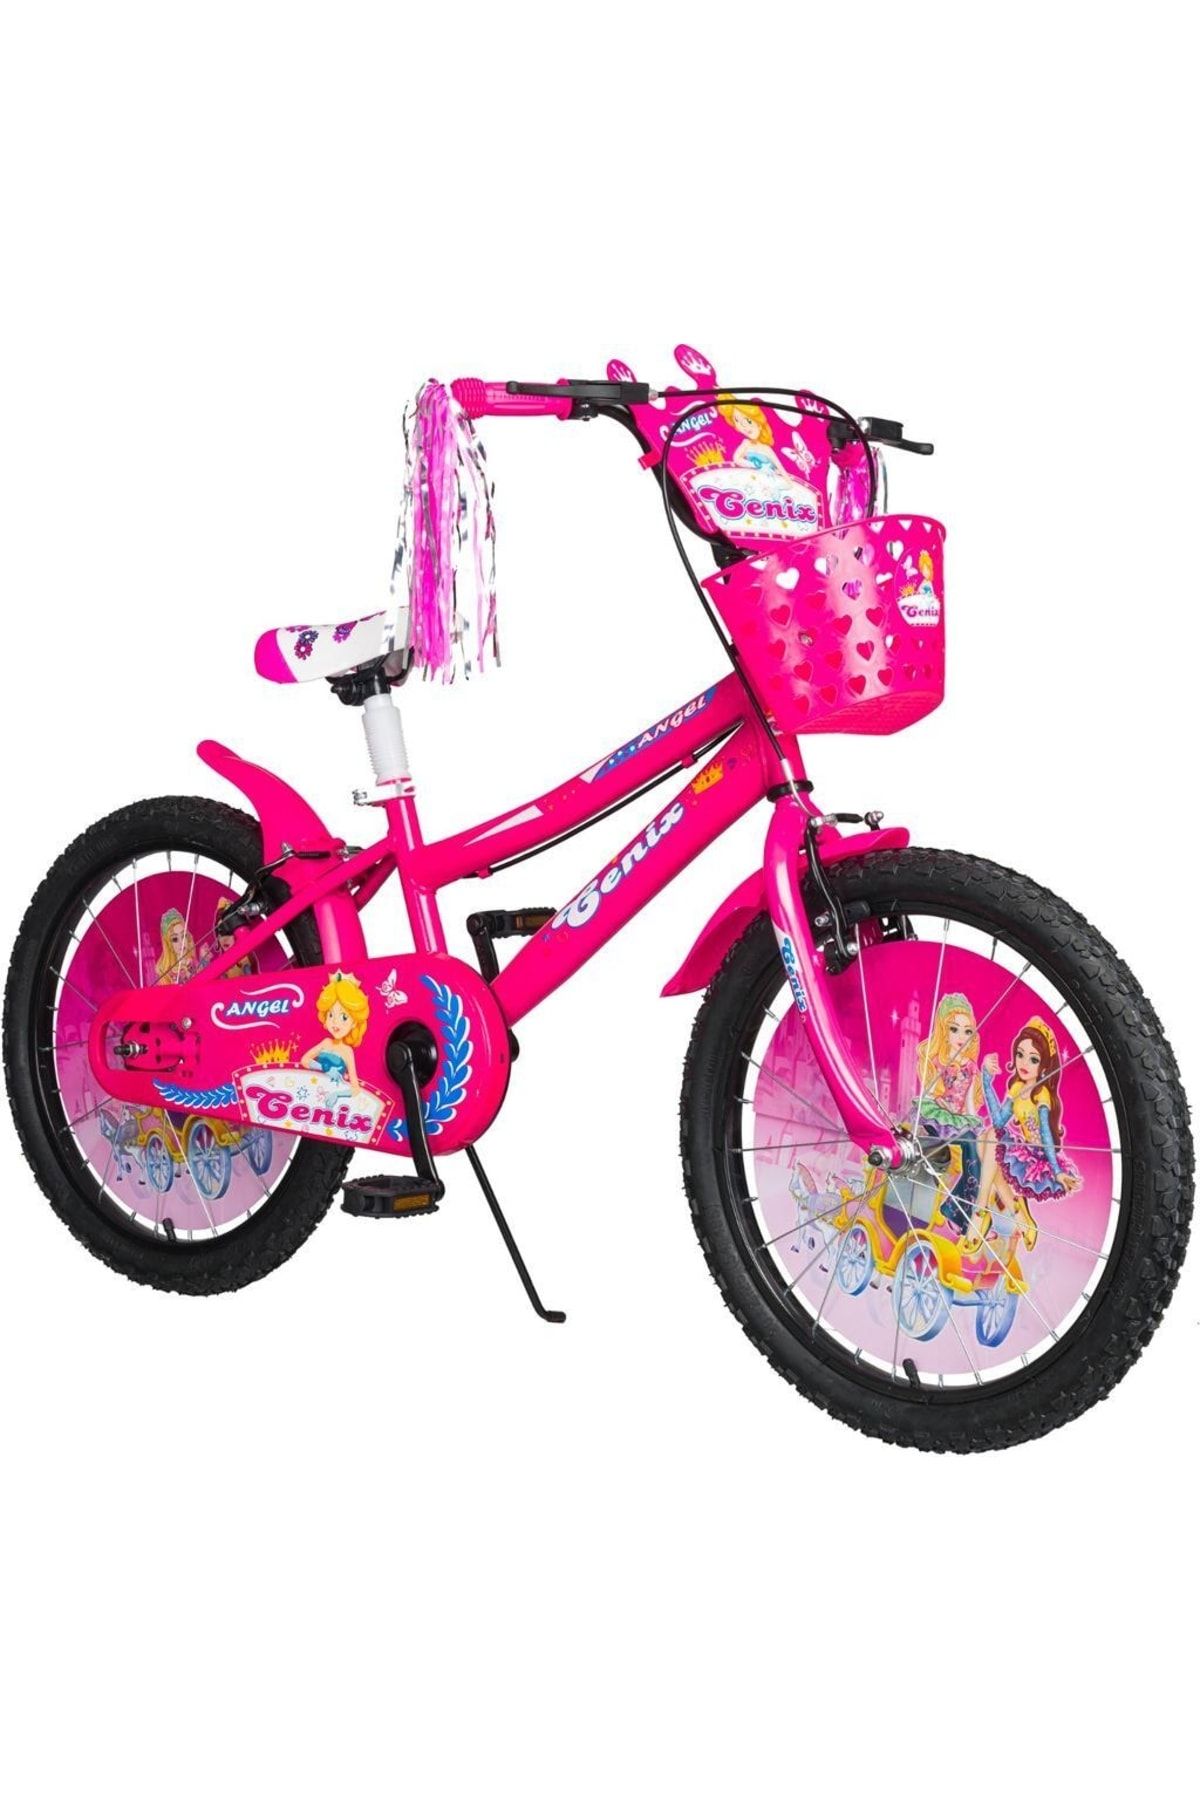 Cenix 20 Jant Lily Kız Bisikleti 6-10 Yaş Bisiklet 2024